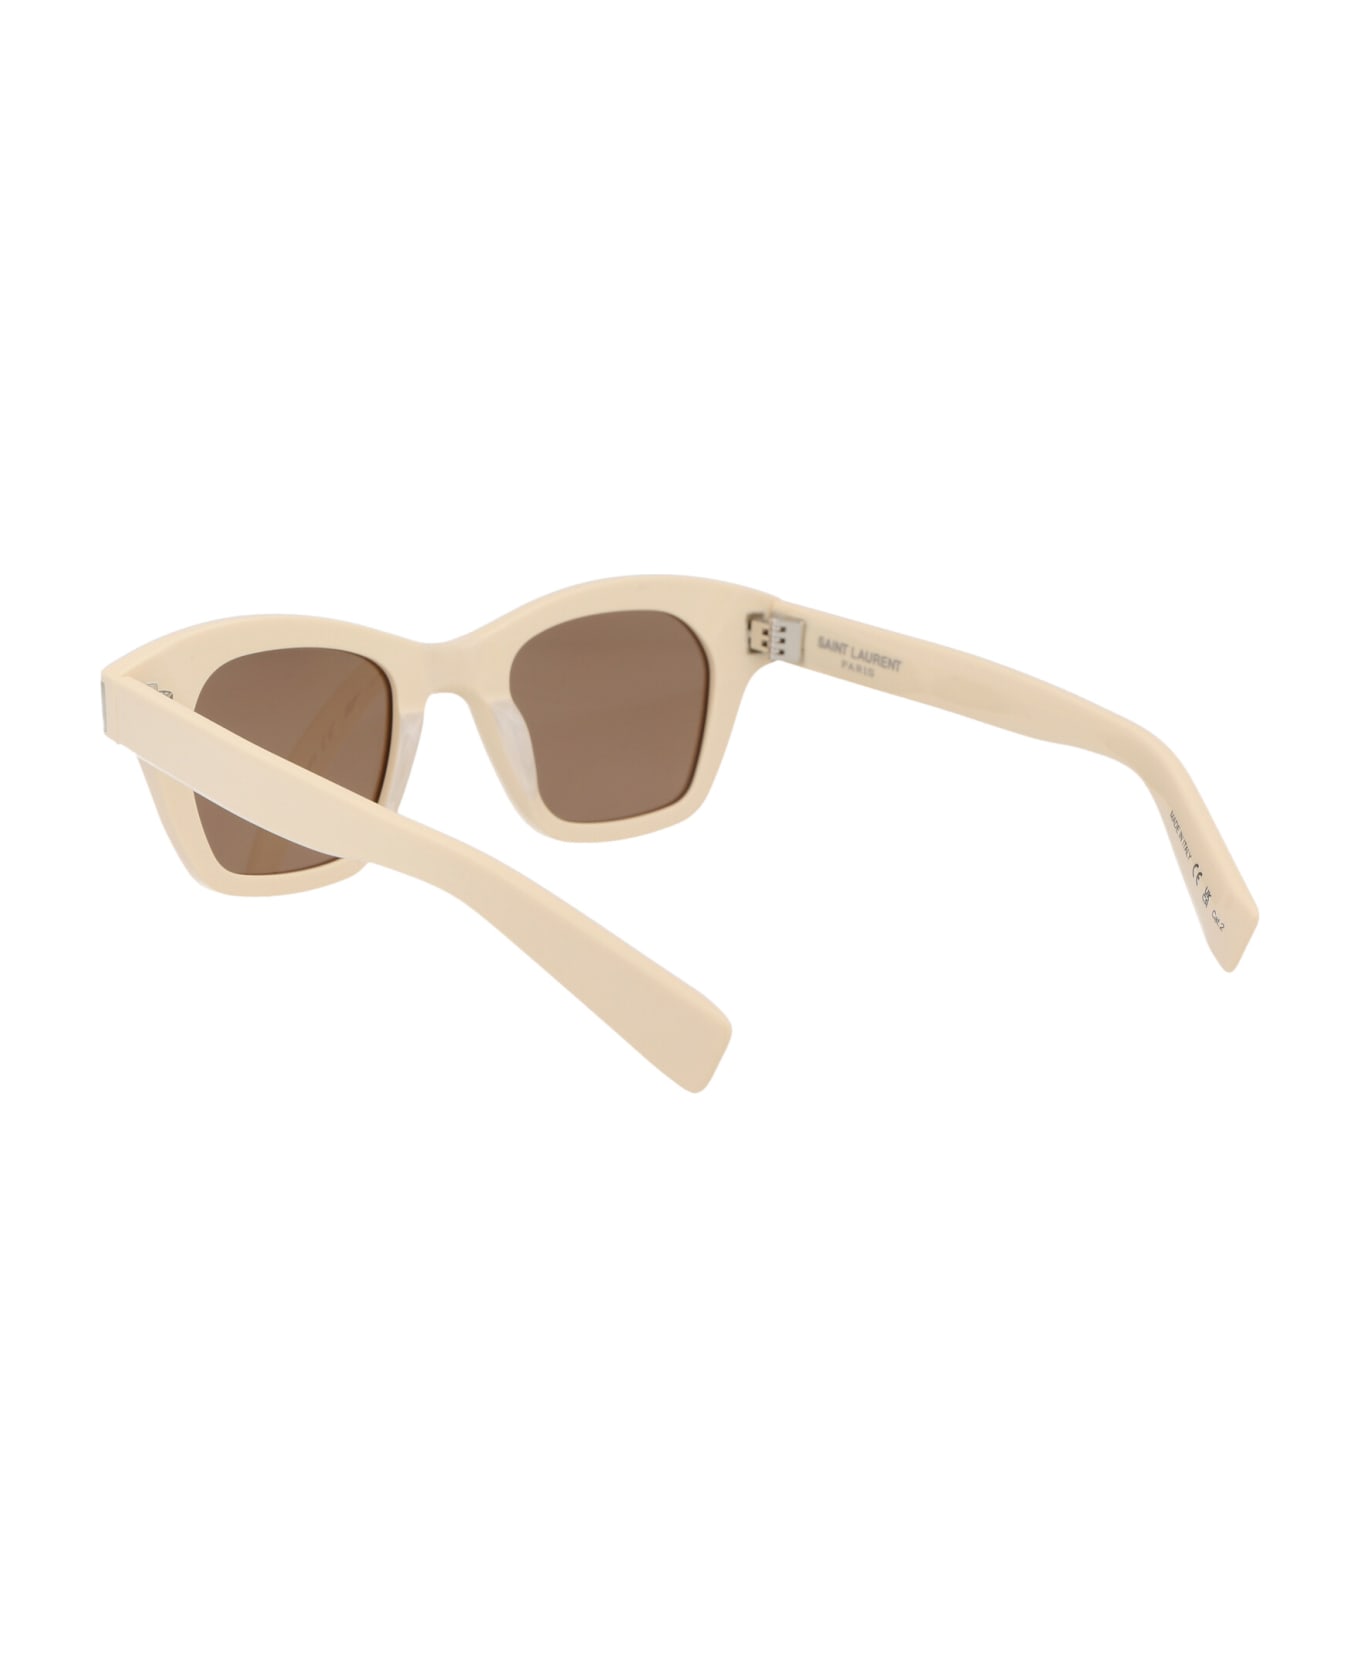 Saint Laurent Eyewear Sl 592 Sunglasses - 004 IVORY IVORY BROWN